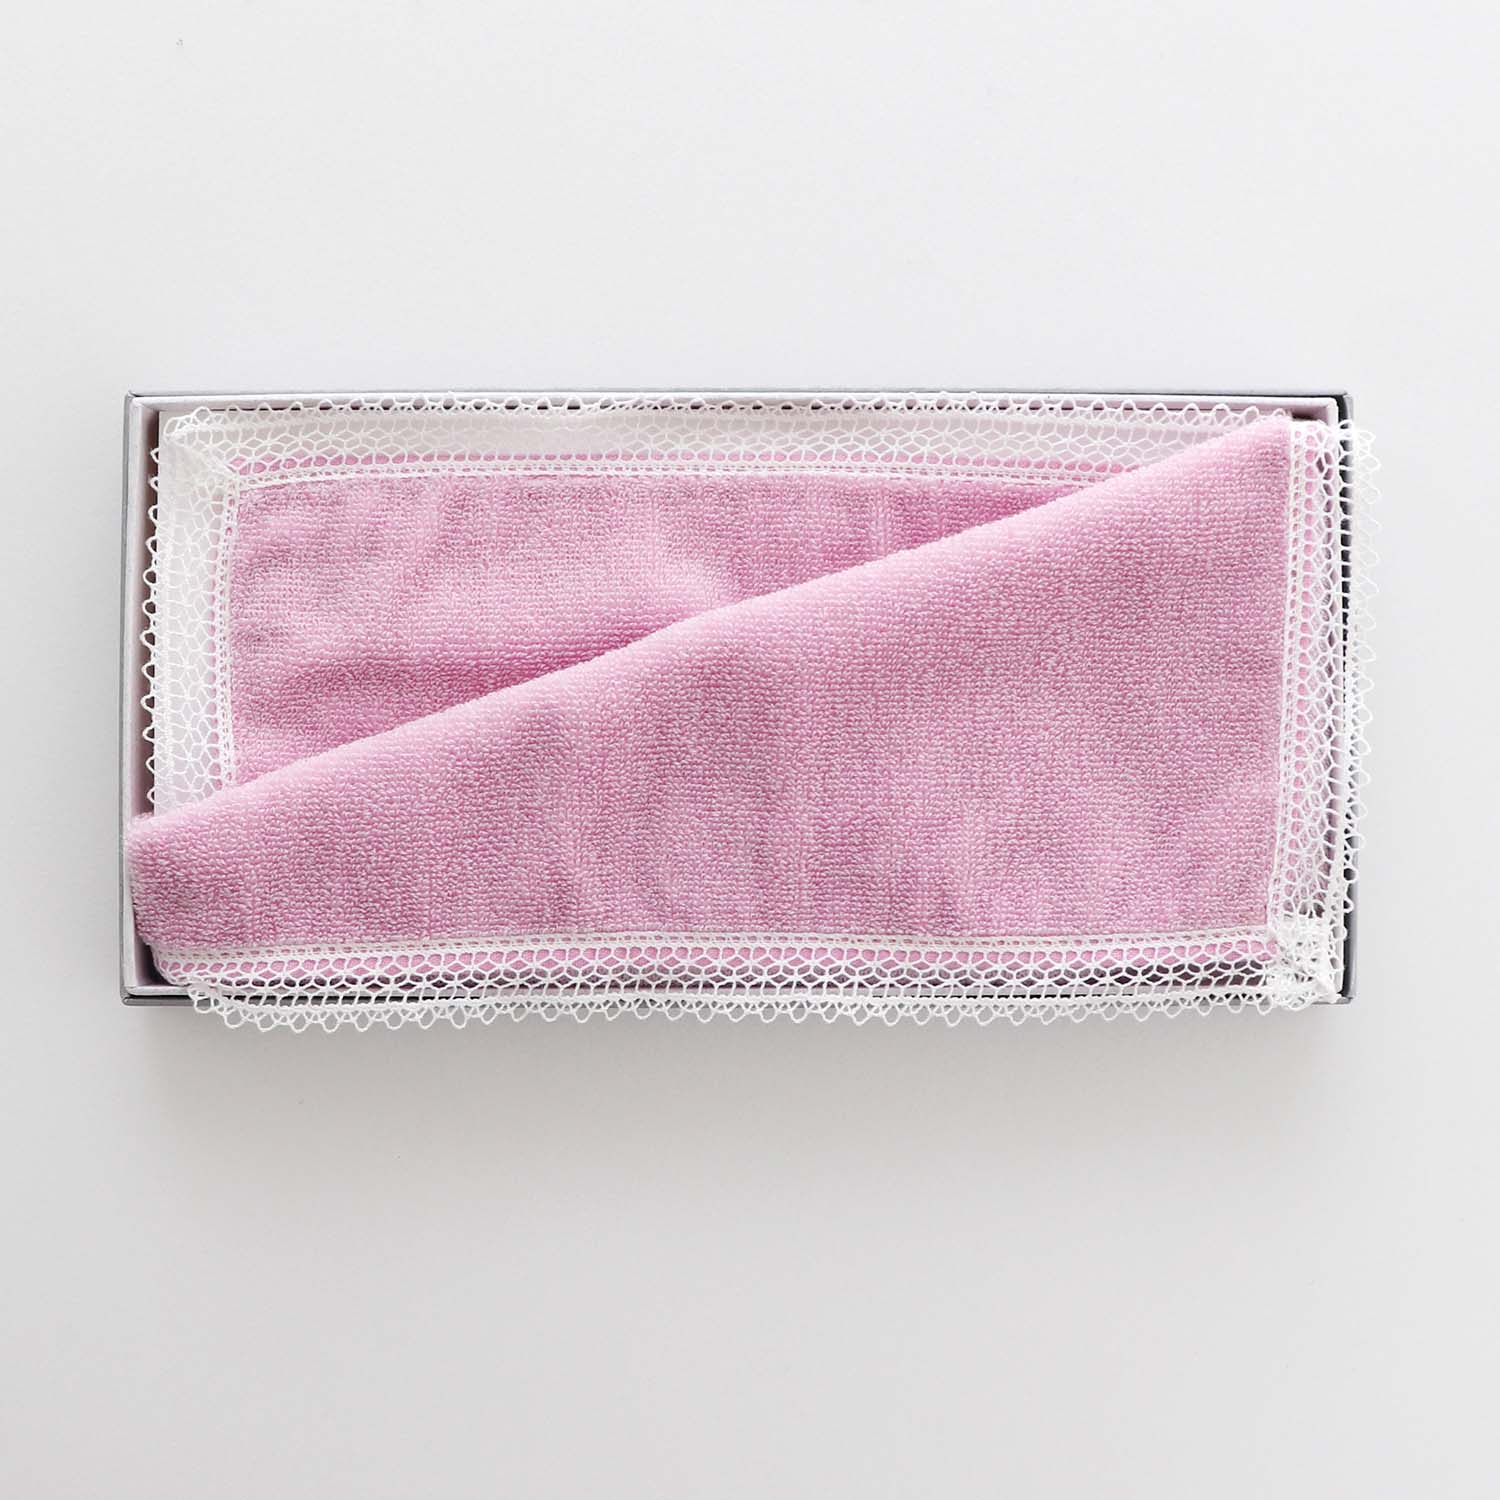 Duo Cotton Towel Lace Towel Handkerchief [Organic